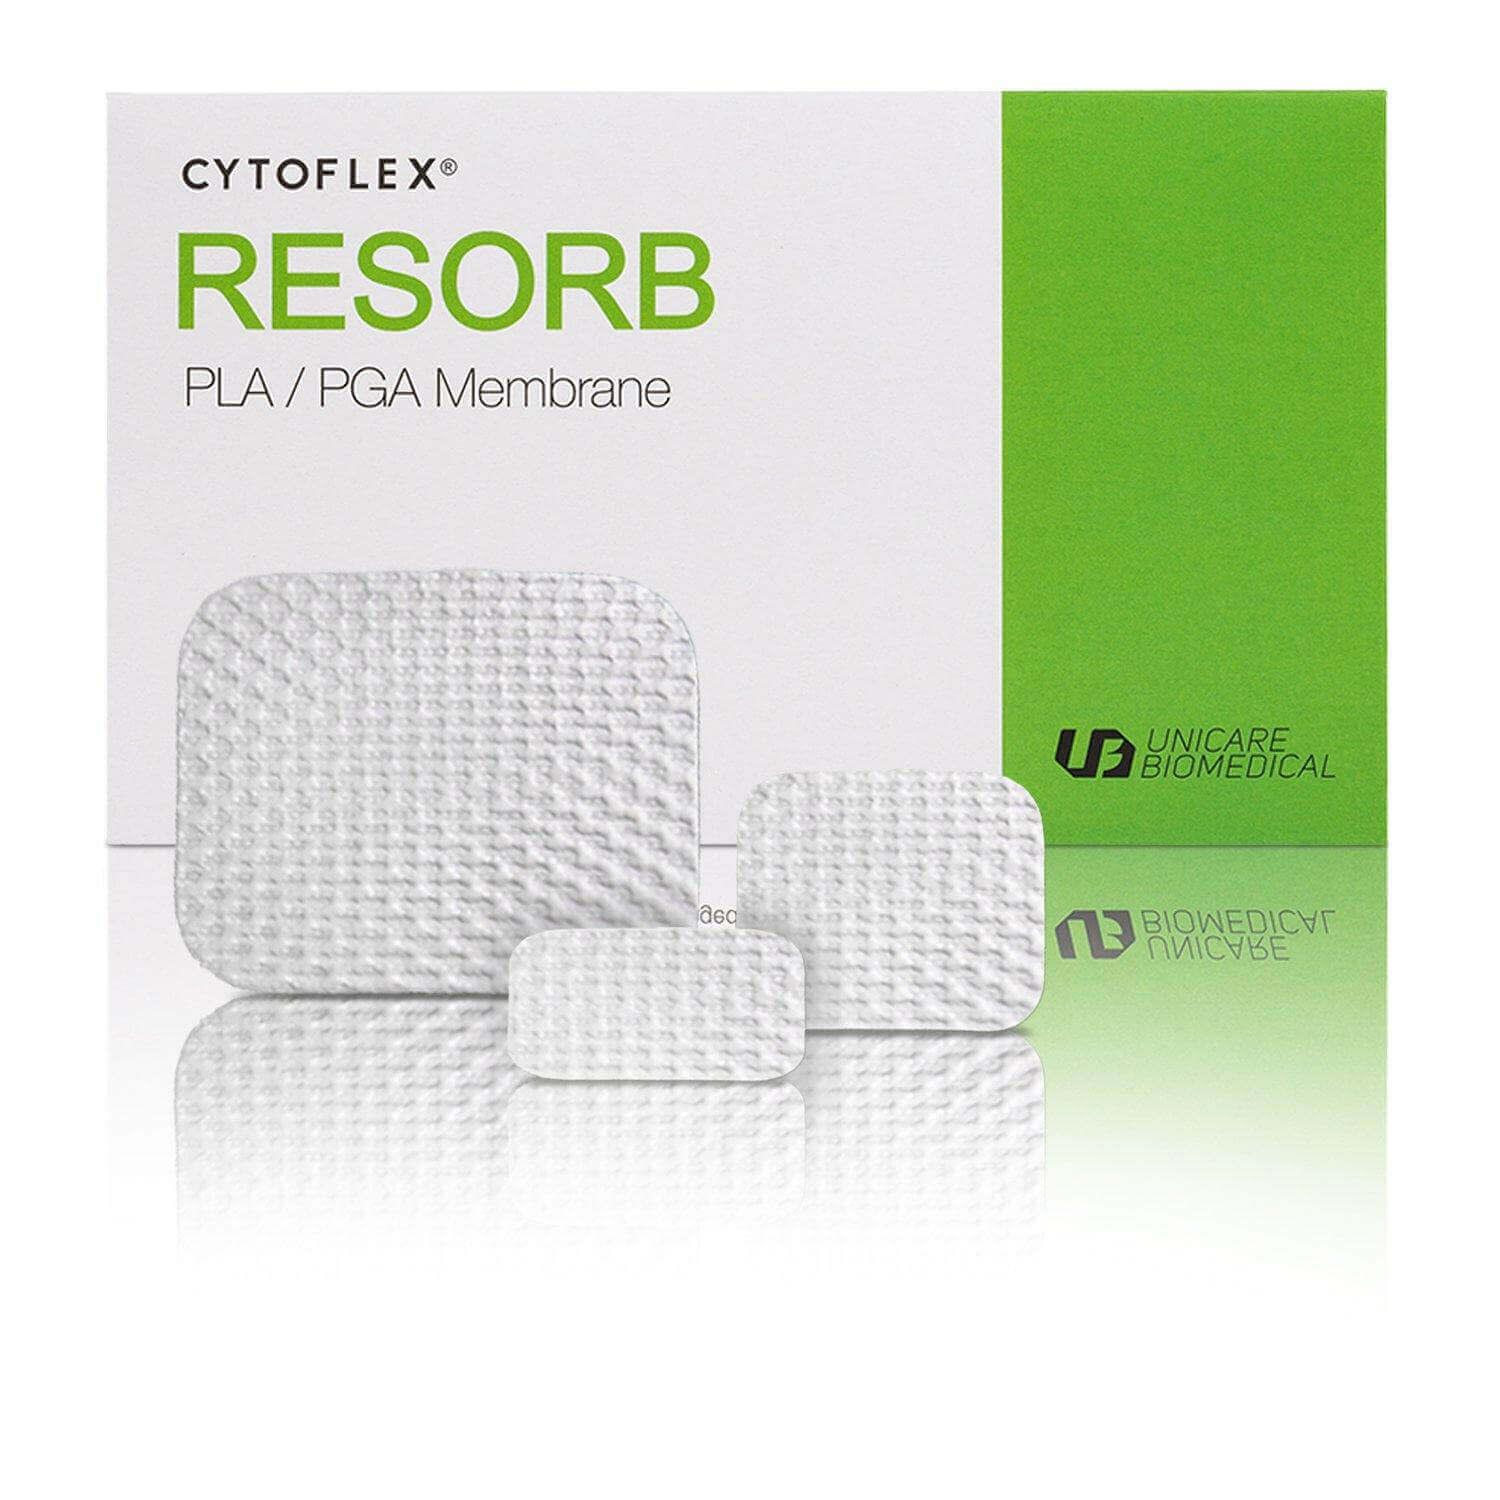 Cytoflex® Resorb PLA/PGA Membrane - Unicare Biomedical Inc.